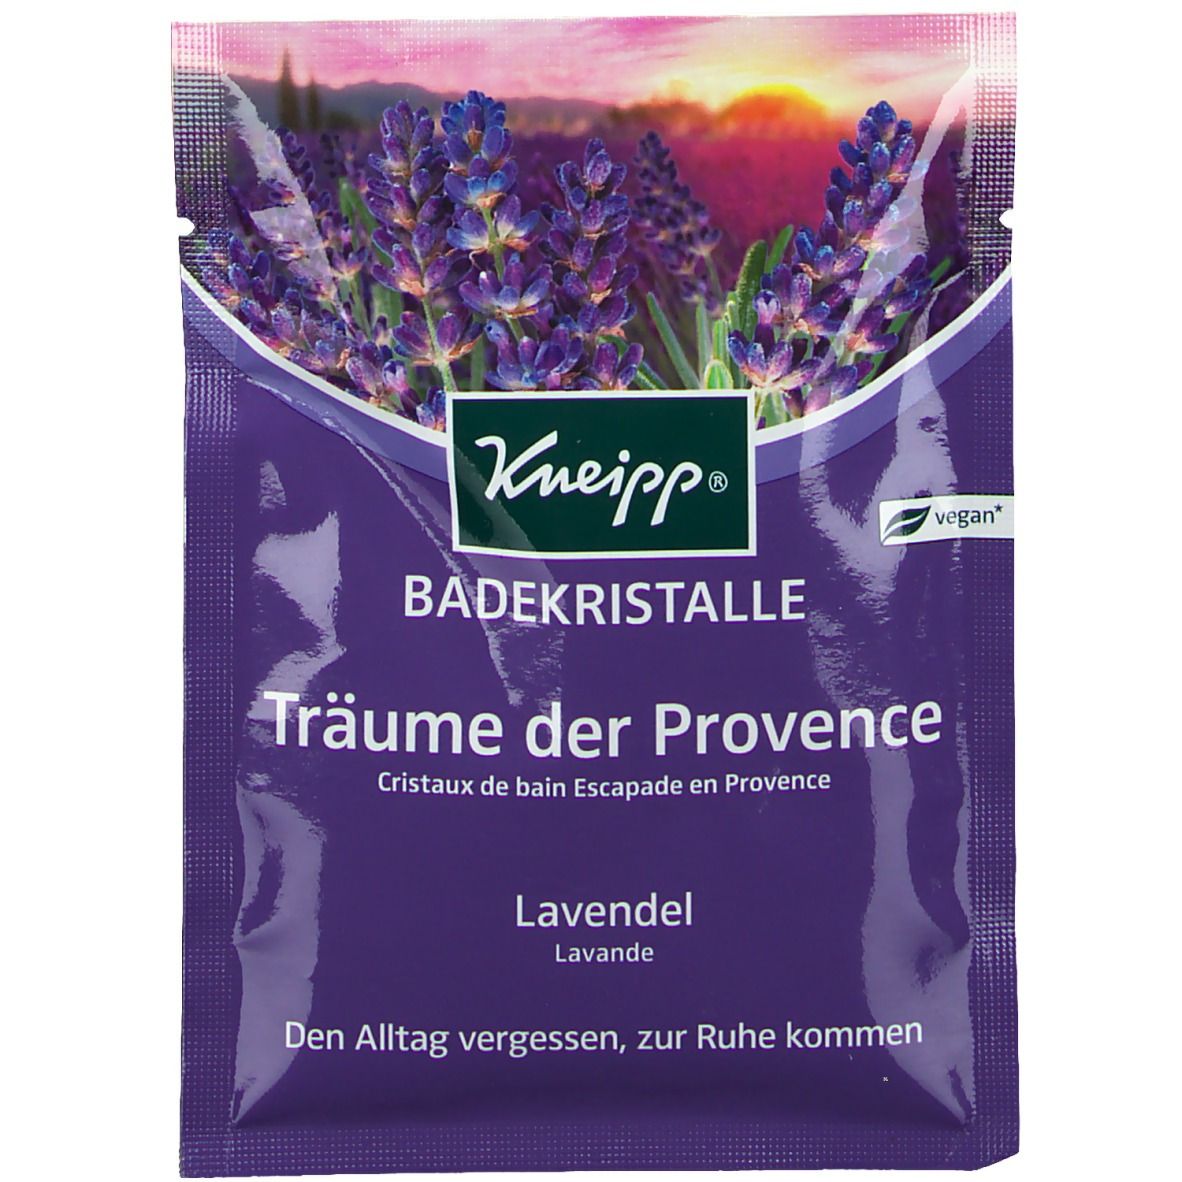 Kneipp® Badekristalle Träume der Provence